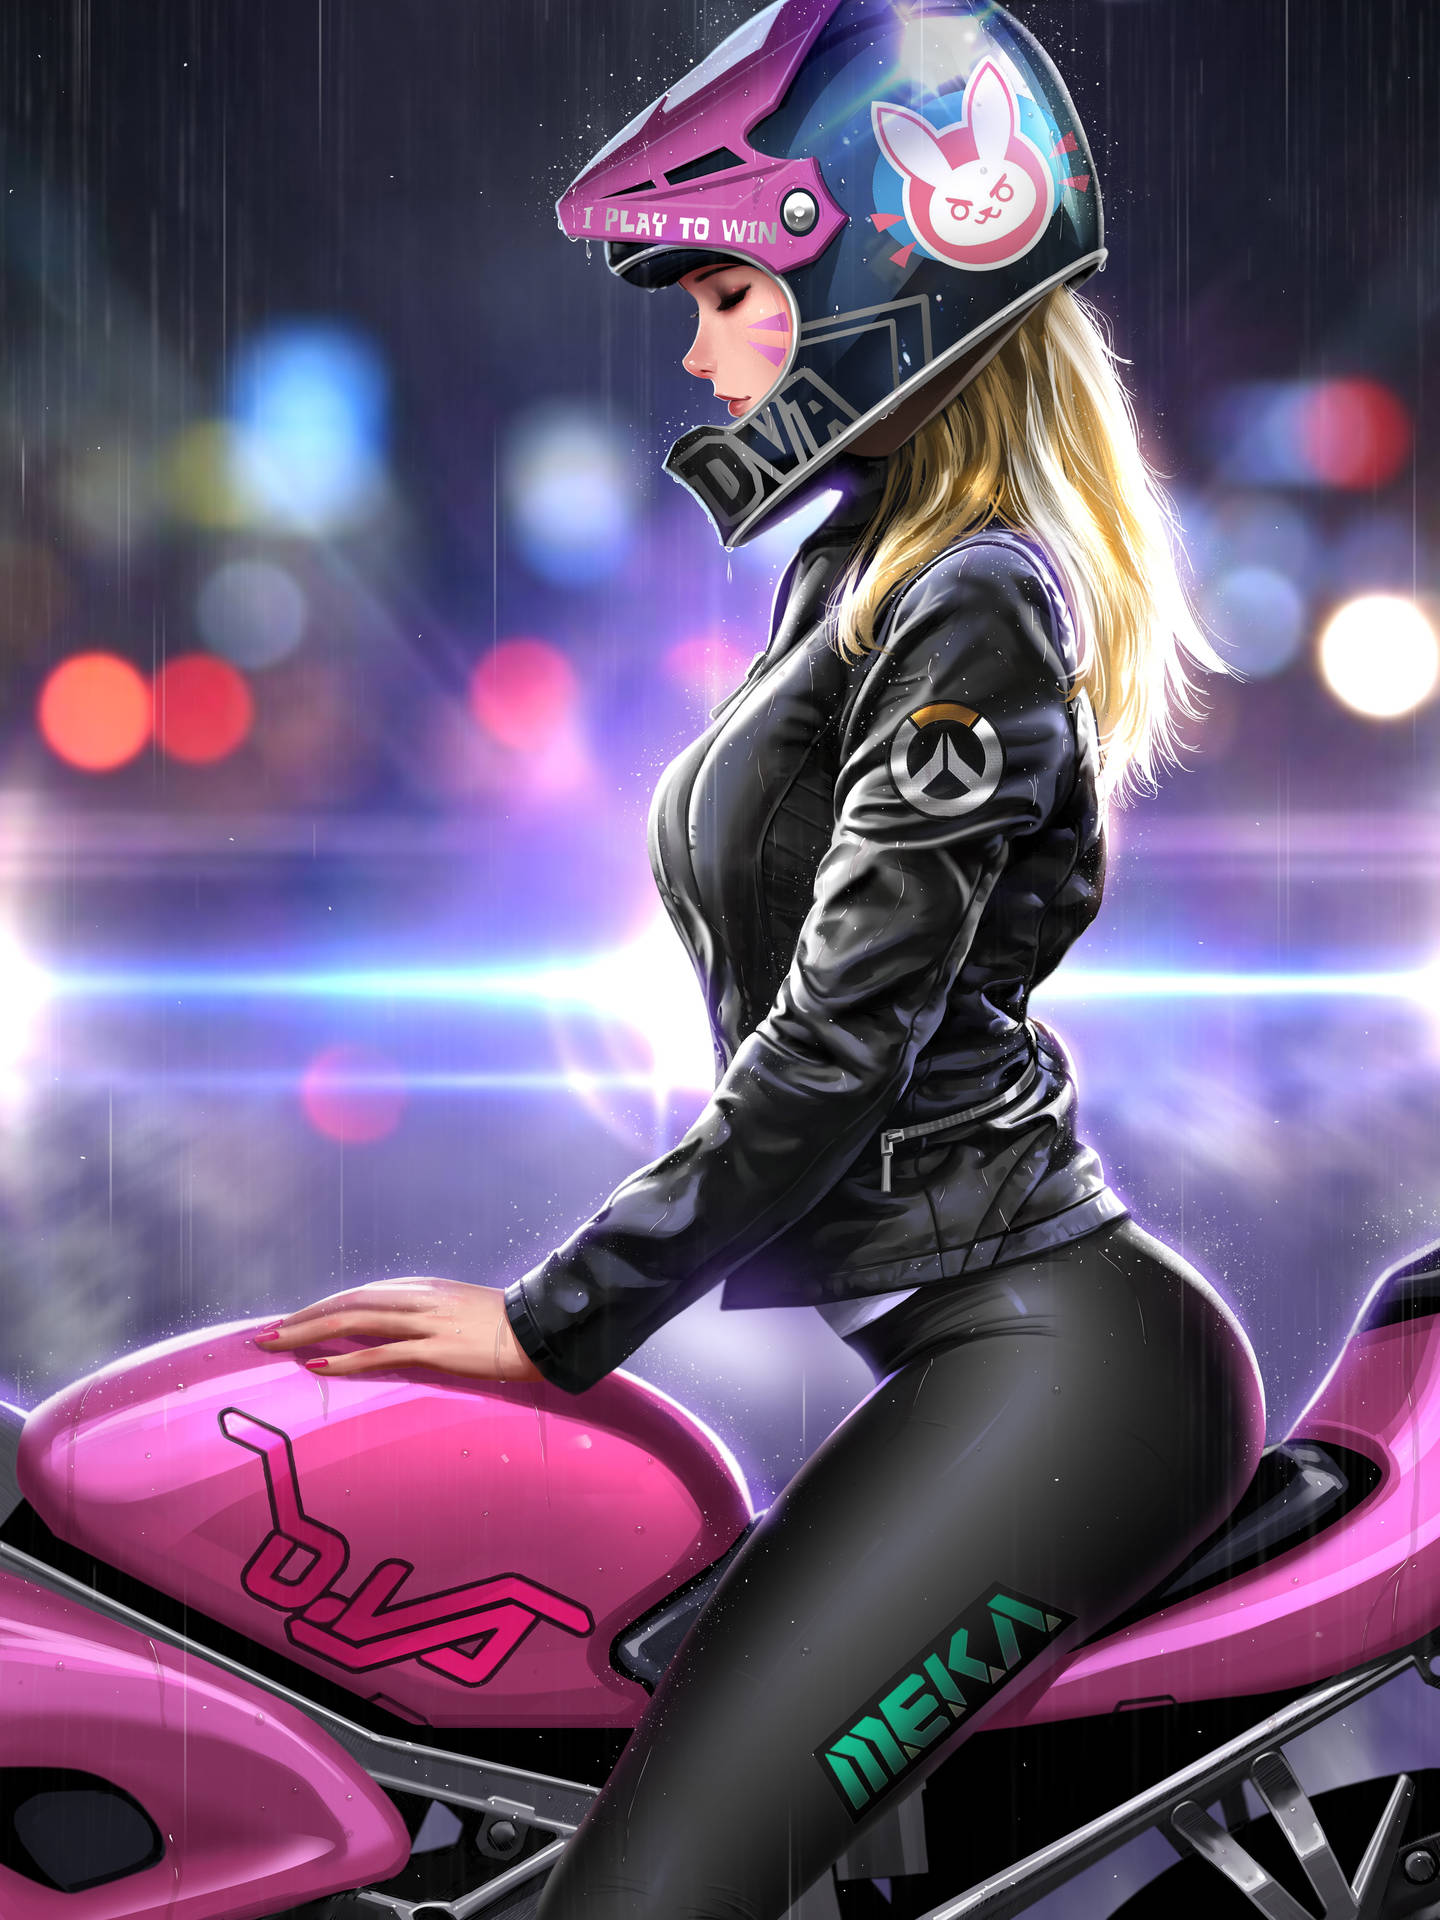 Animated Girl On A Motorbike Background